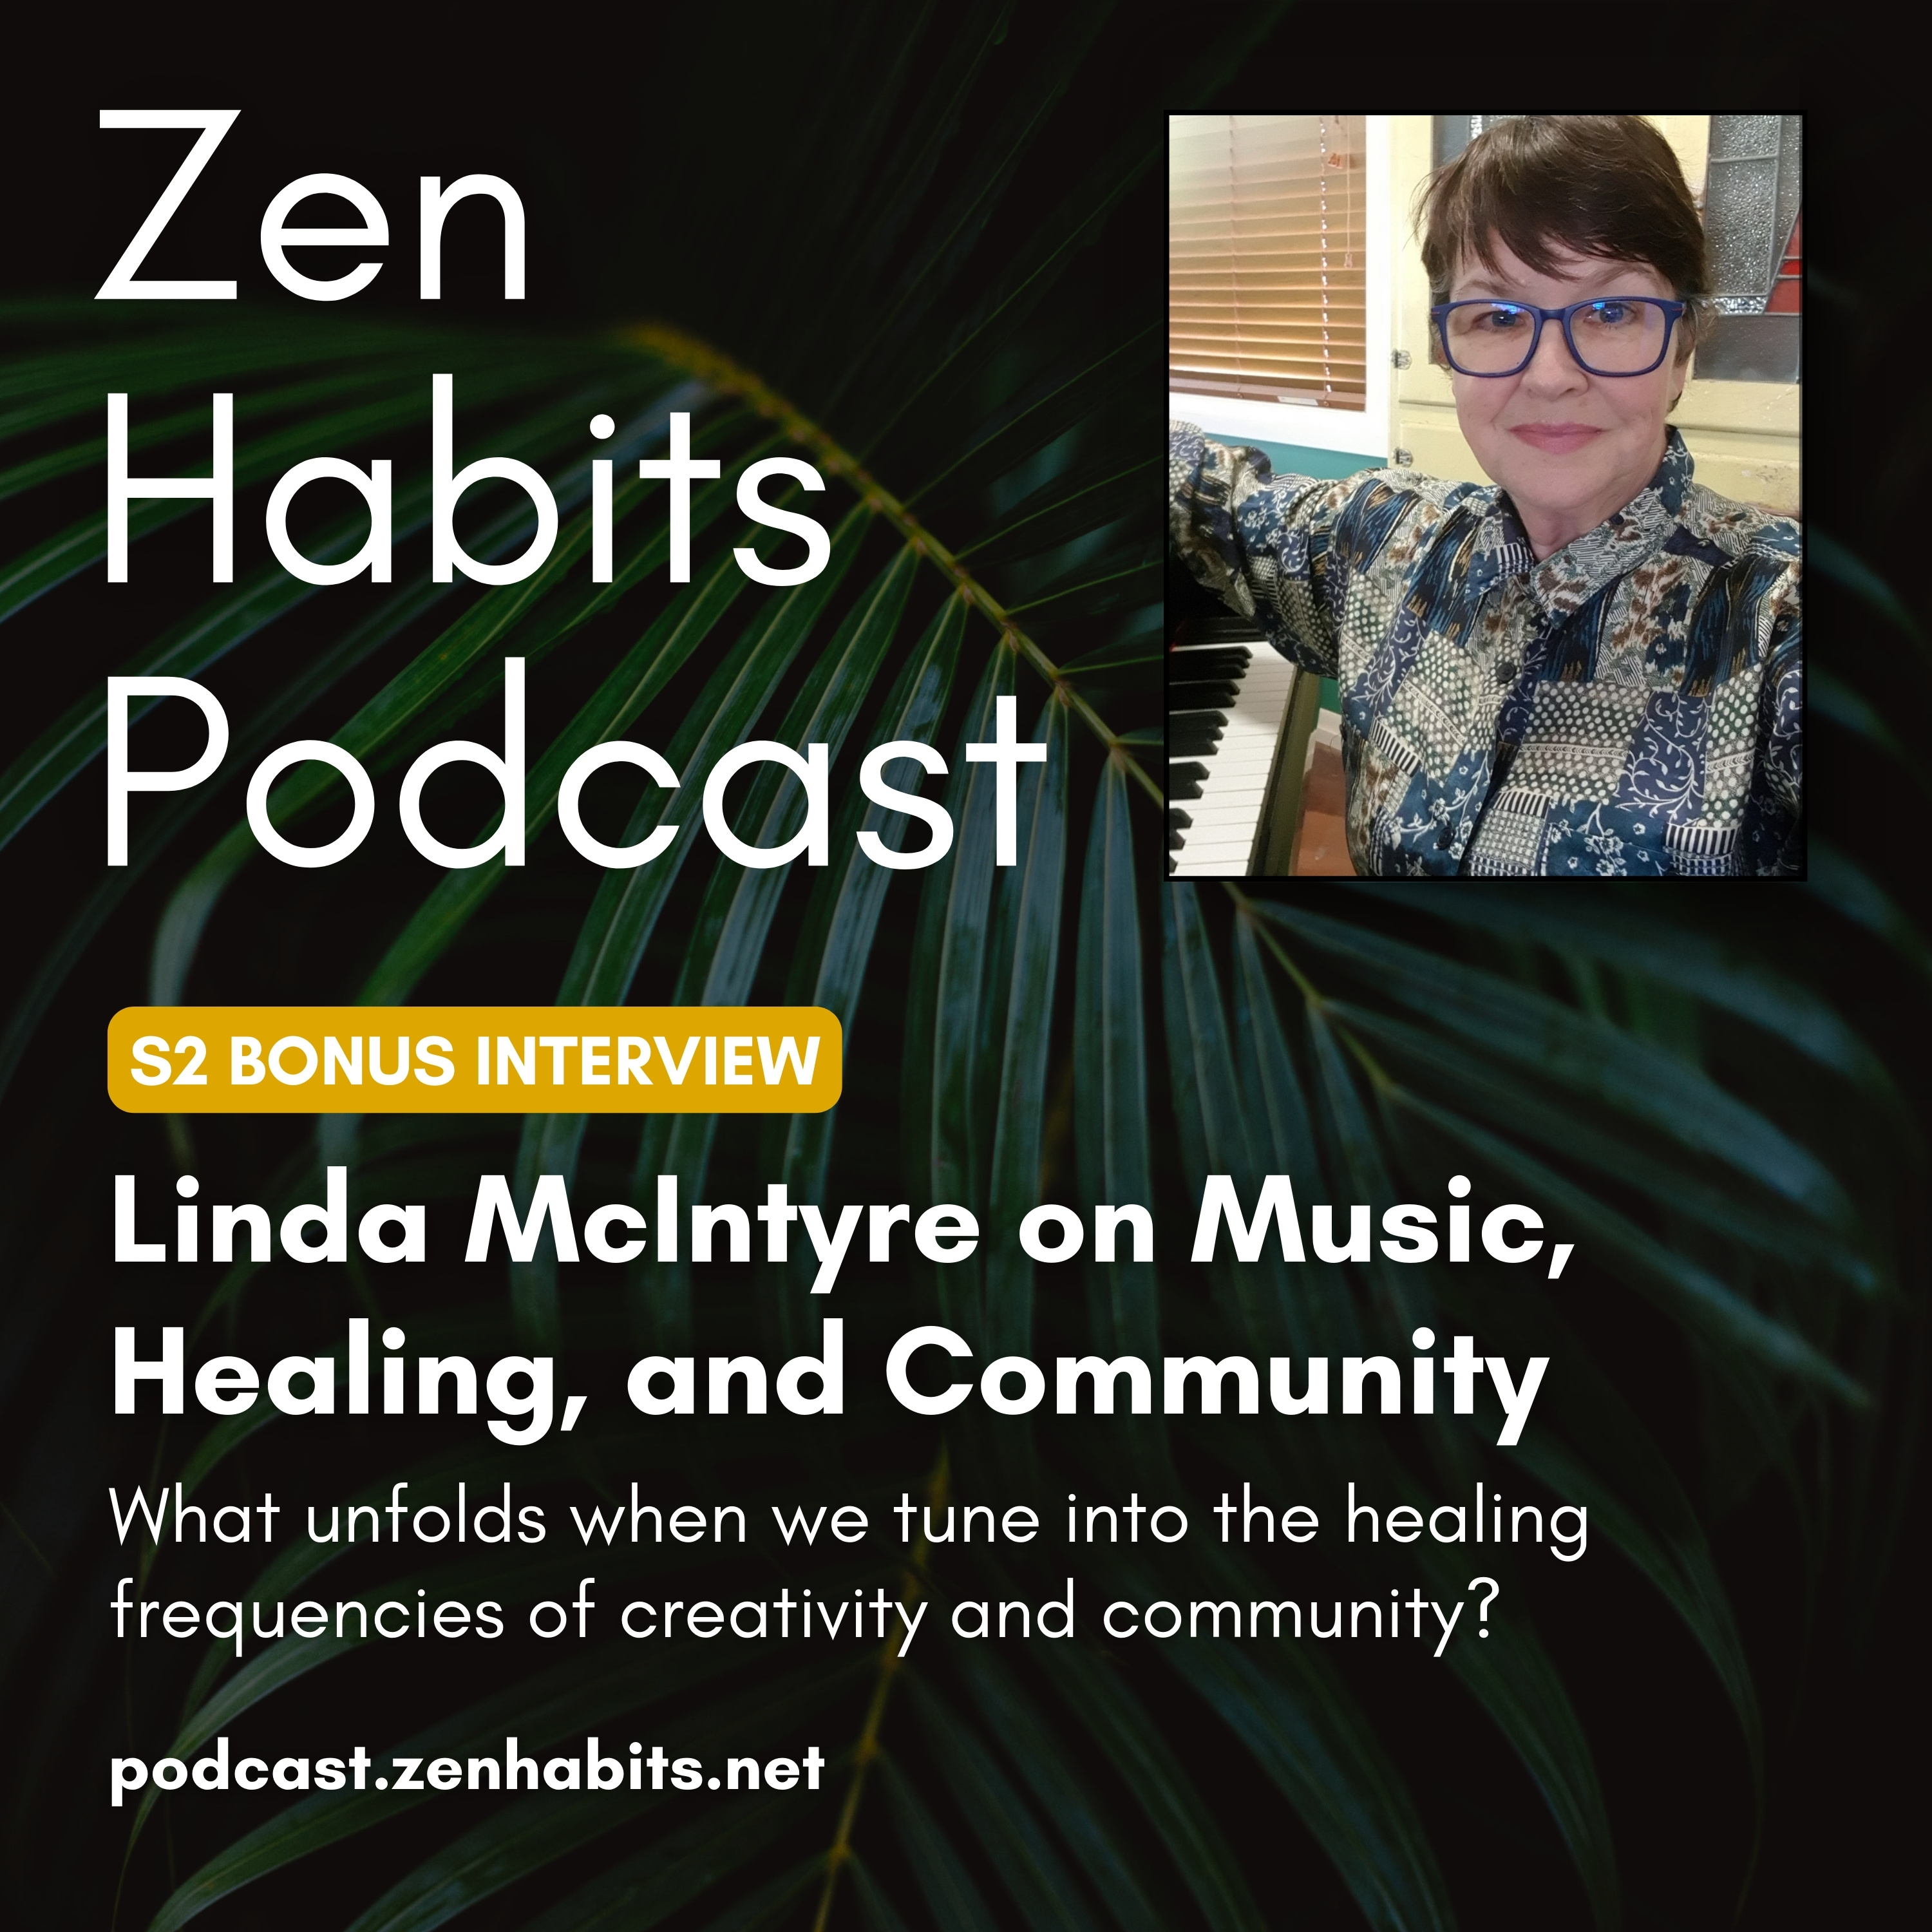 Linda McIntyre on Music, Healing, and Community